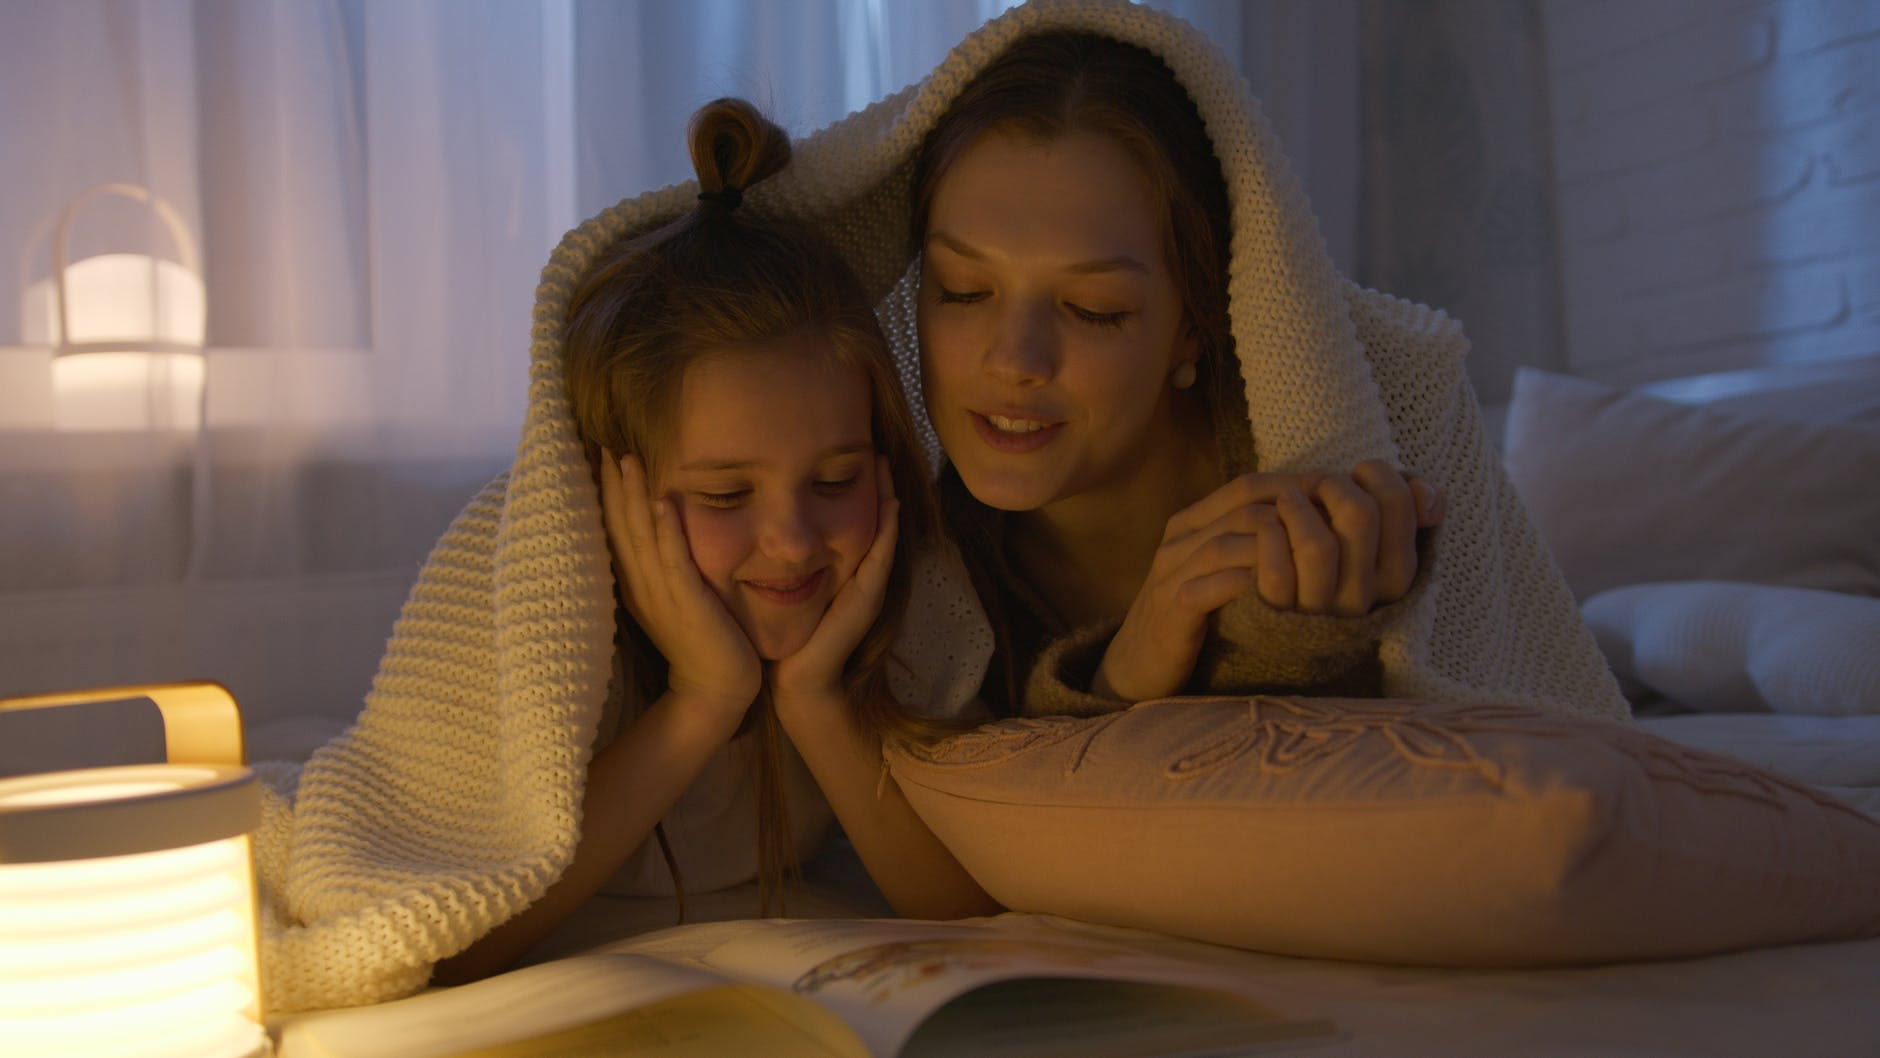 Bedtime Stories for Children: Nurturing a Strong Sense of Identity